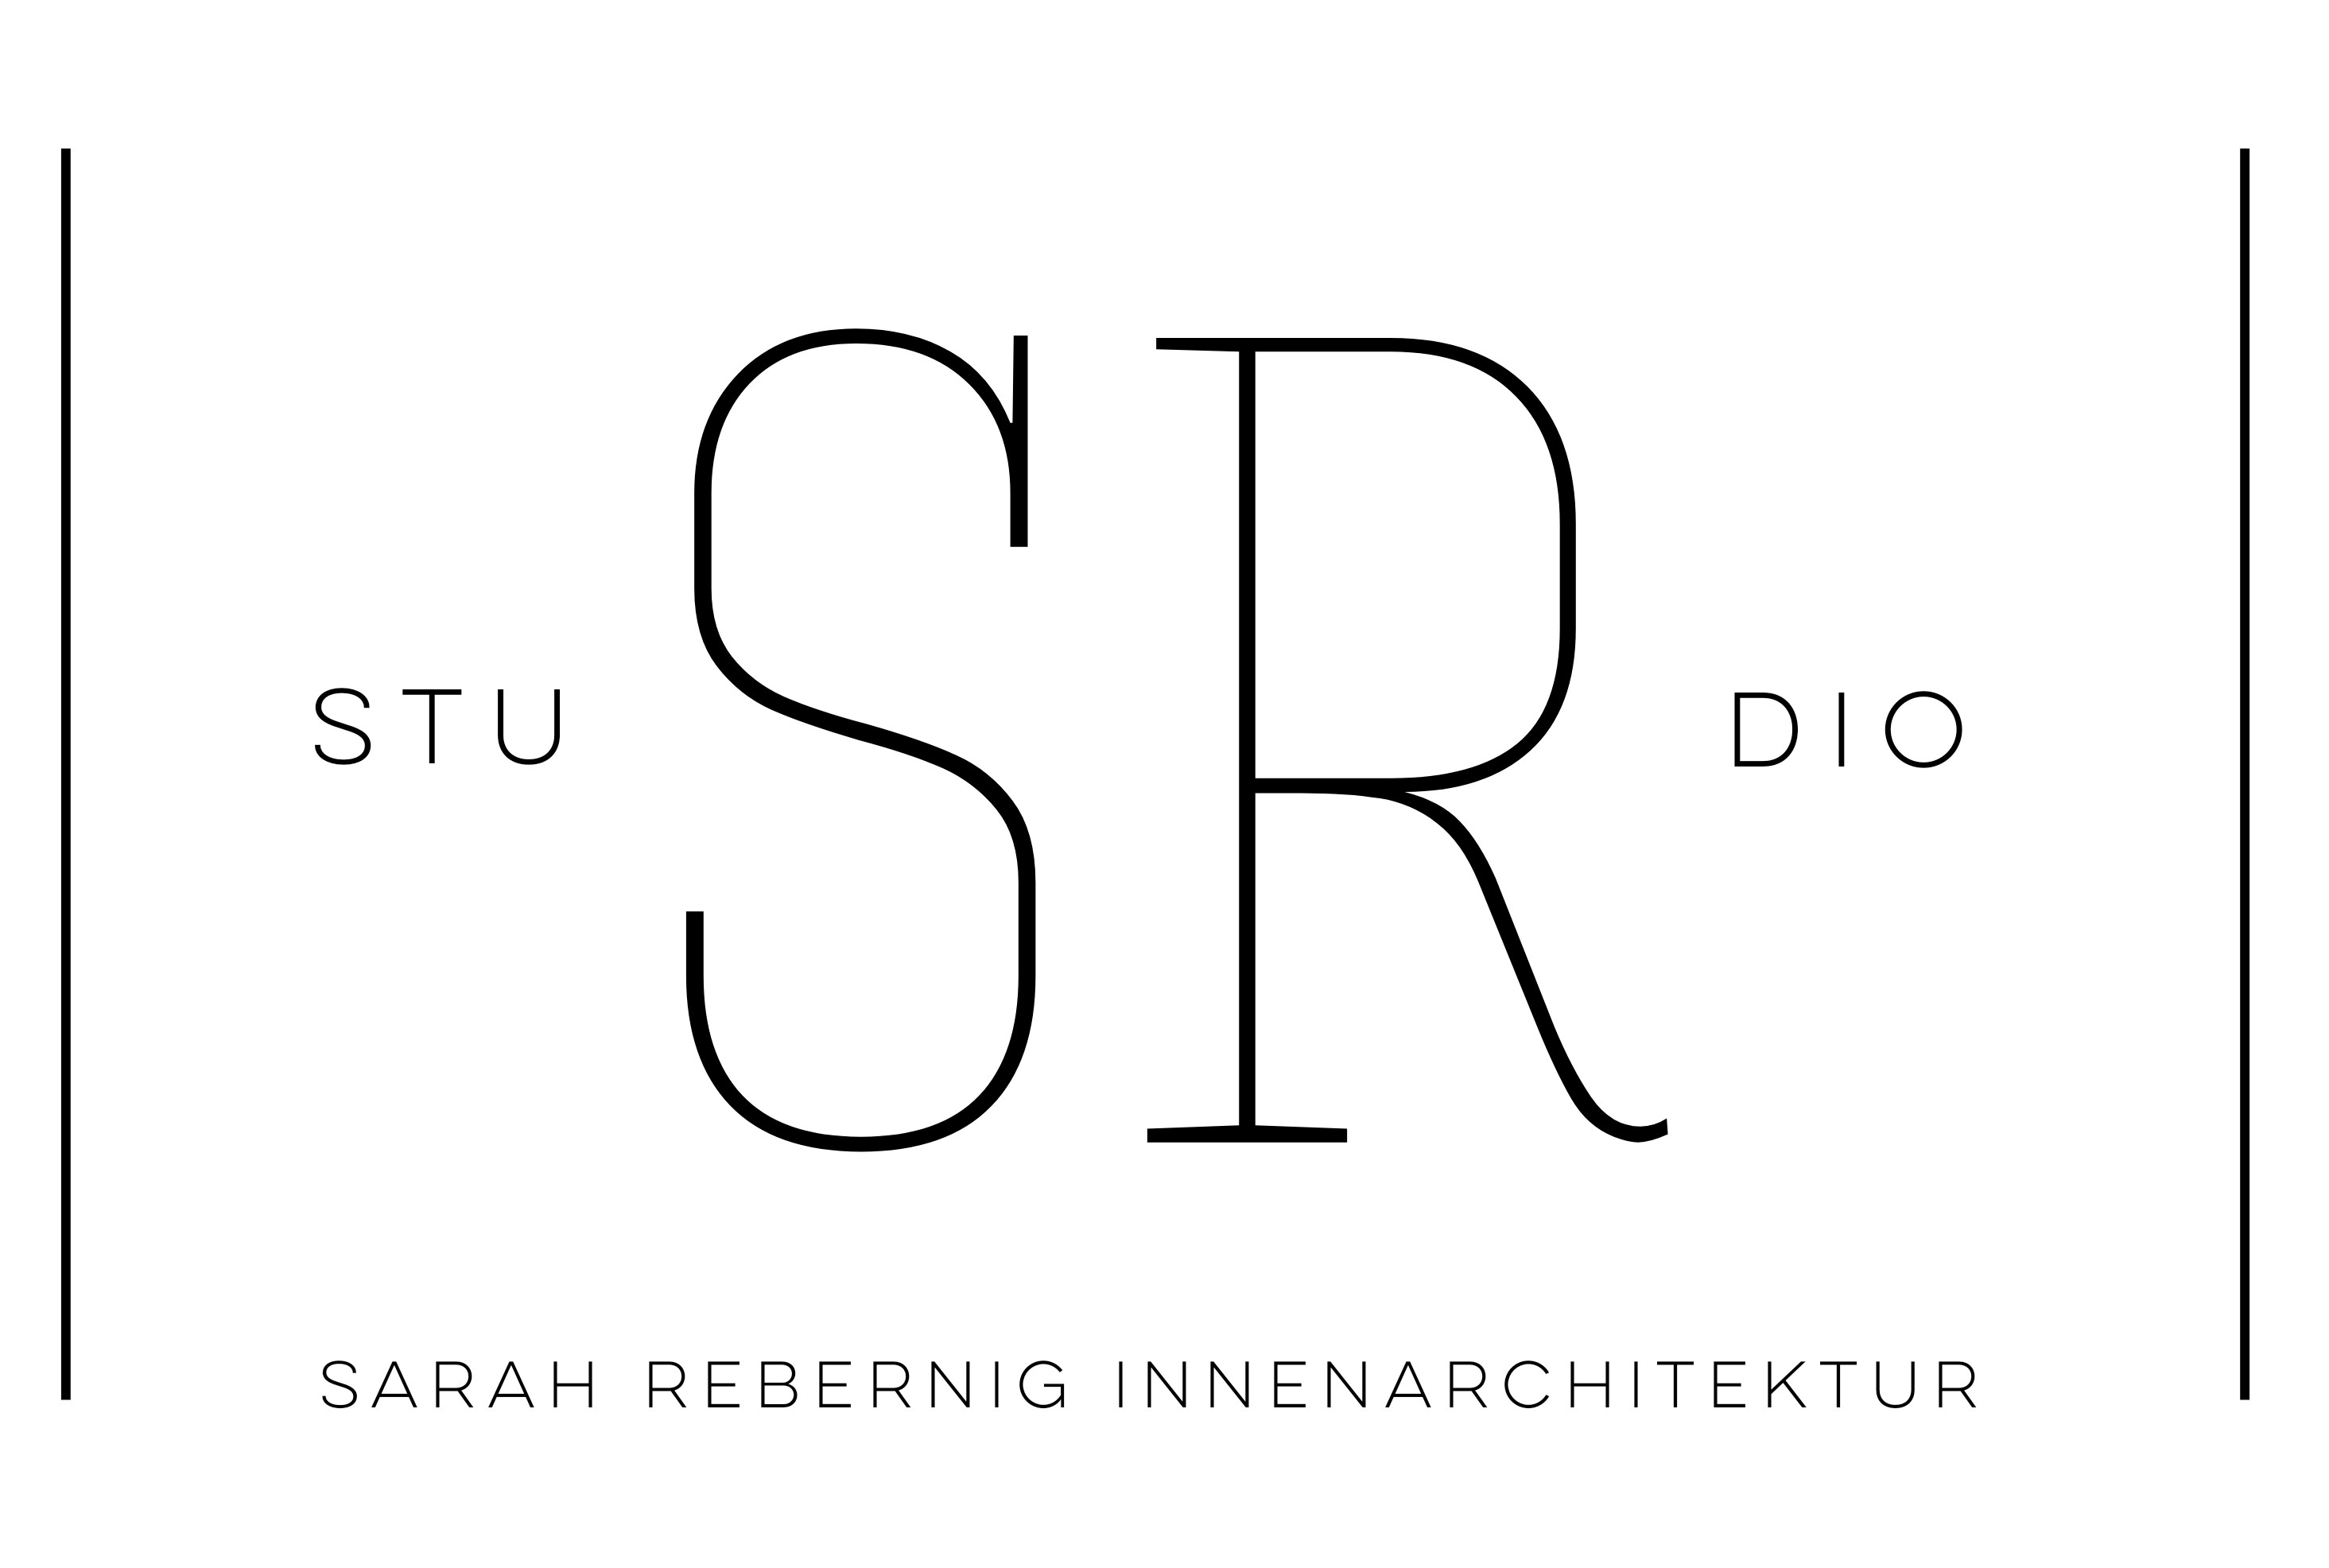 Studio SR - Sarah Rebernig Innenarchitektur